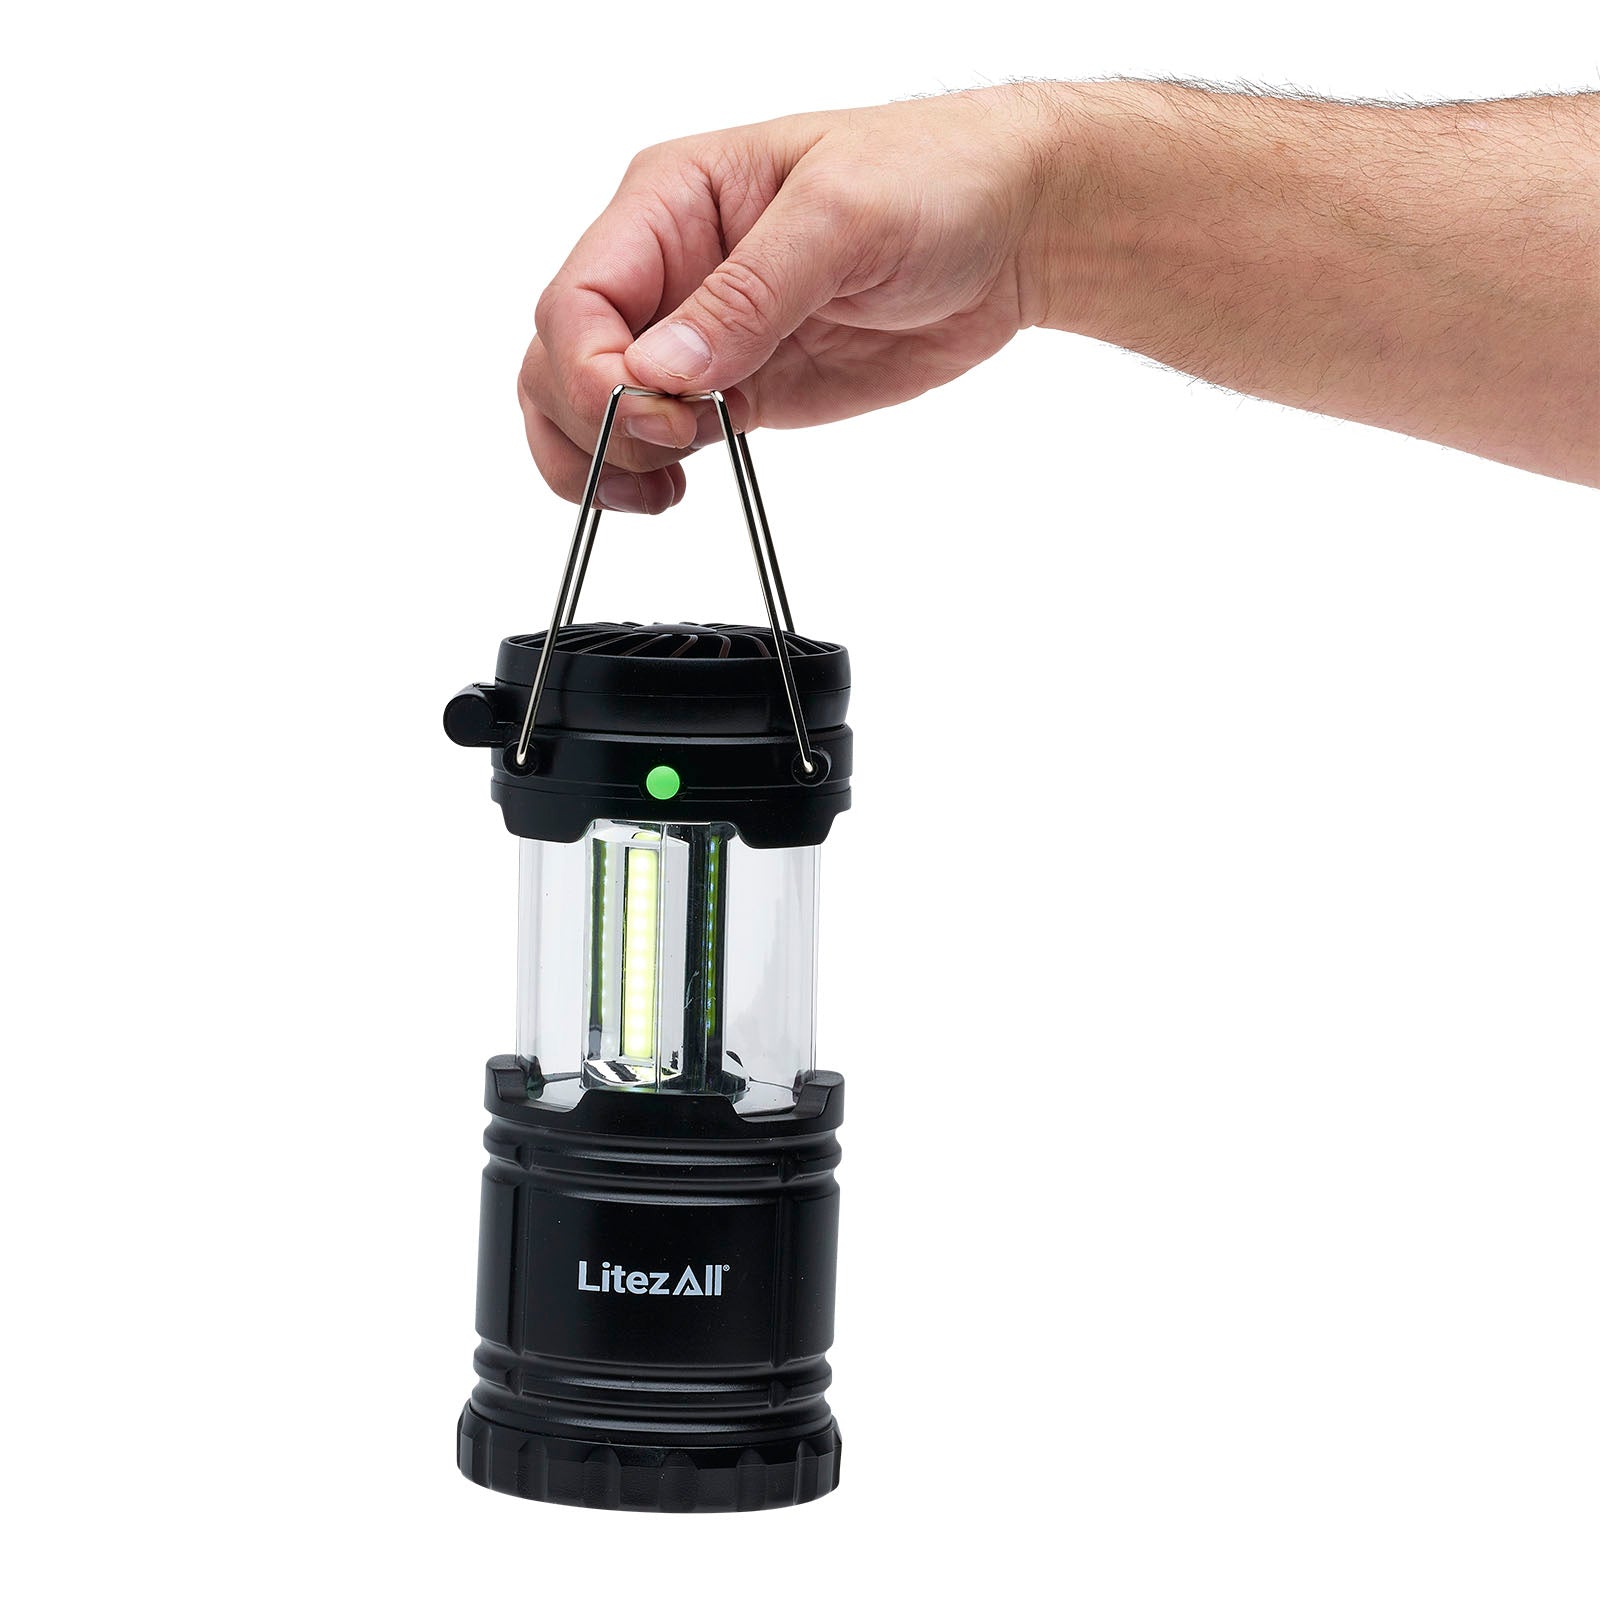 LitezAll LED Camping Lantern with 2 Head Lamp Combo - Portable Battery  Powered Flashlight Lantern for Hurricane, Emergency Survival Kit, Camping